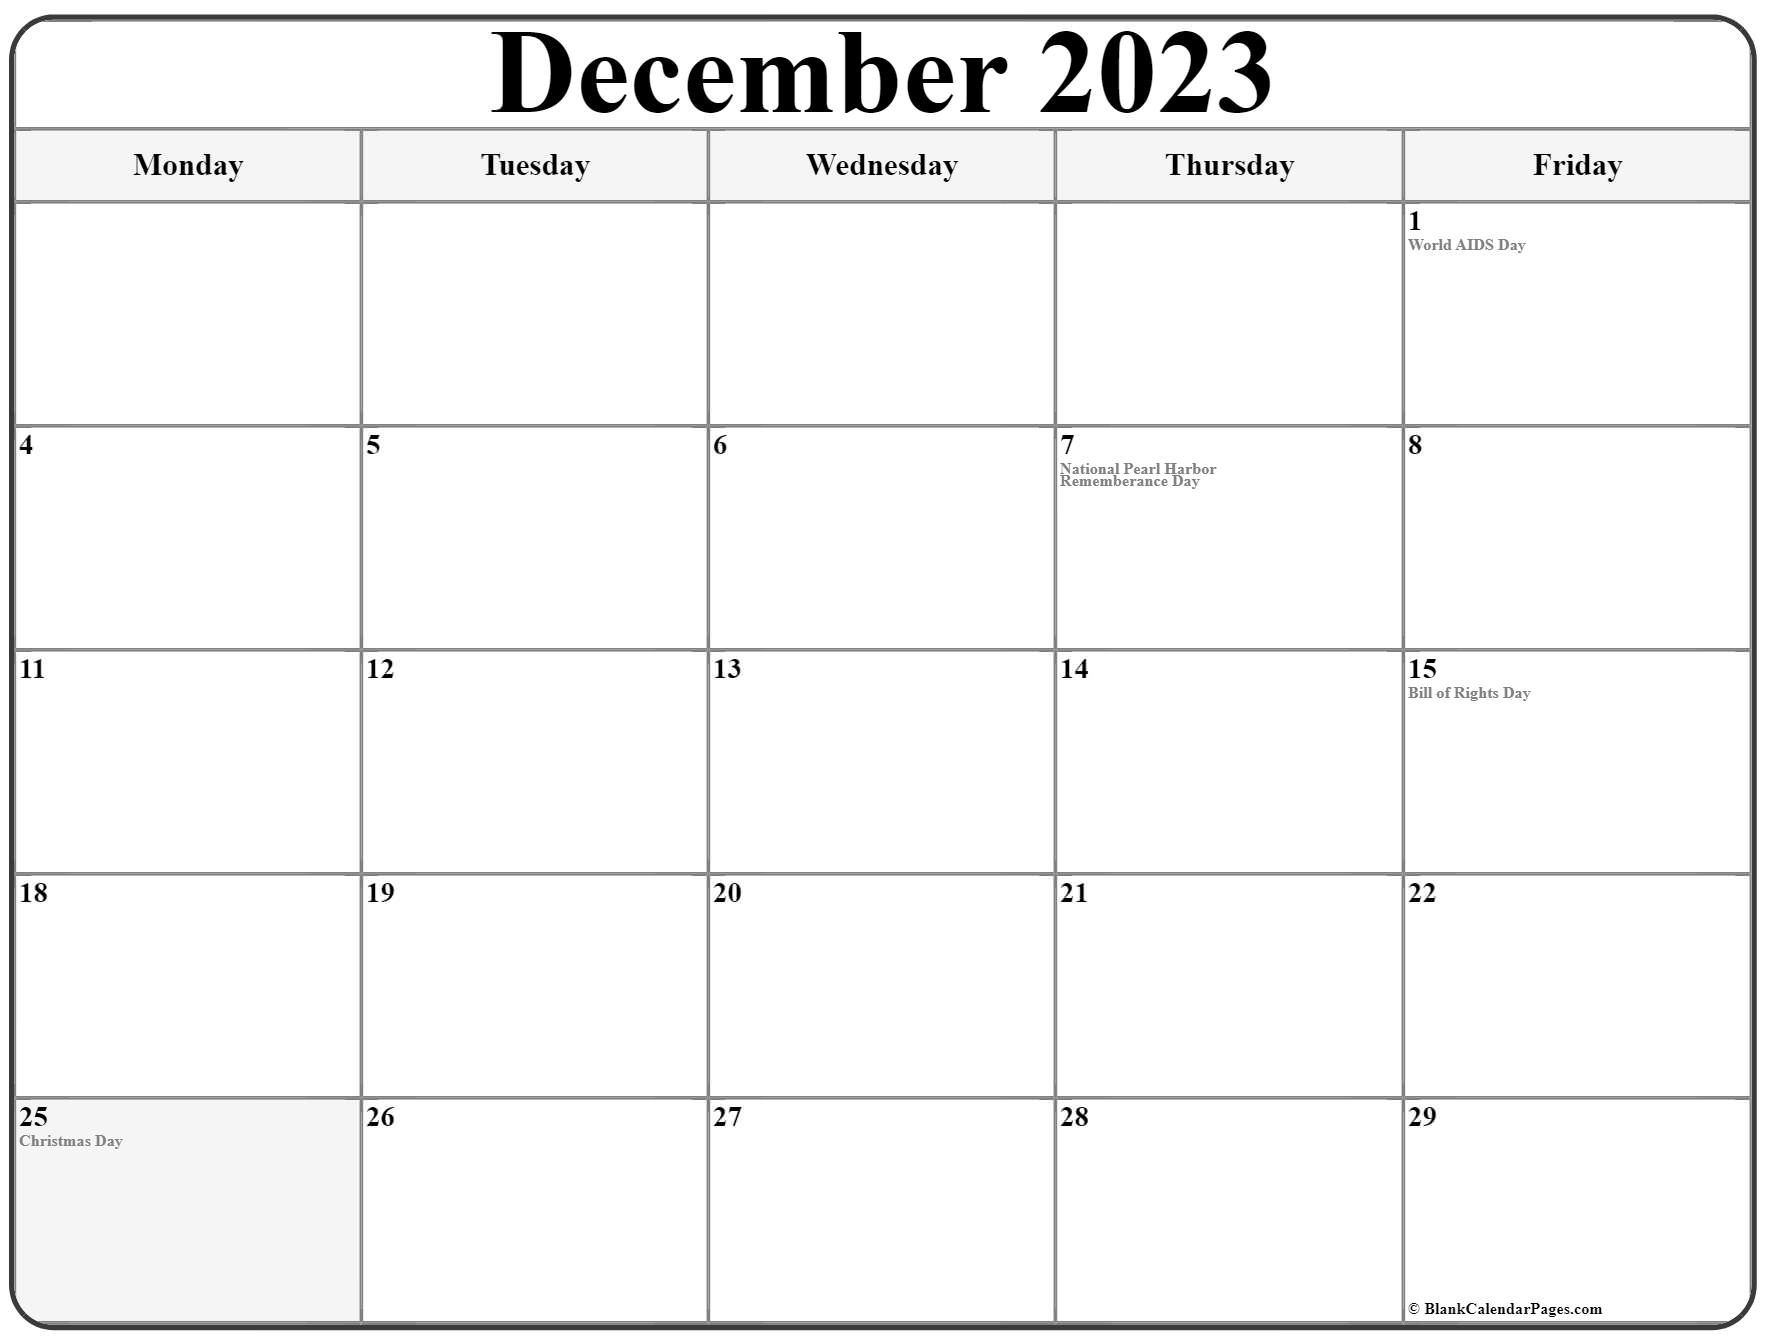 december-2023-monday-calendar-monday-to-sunday